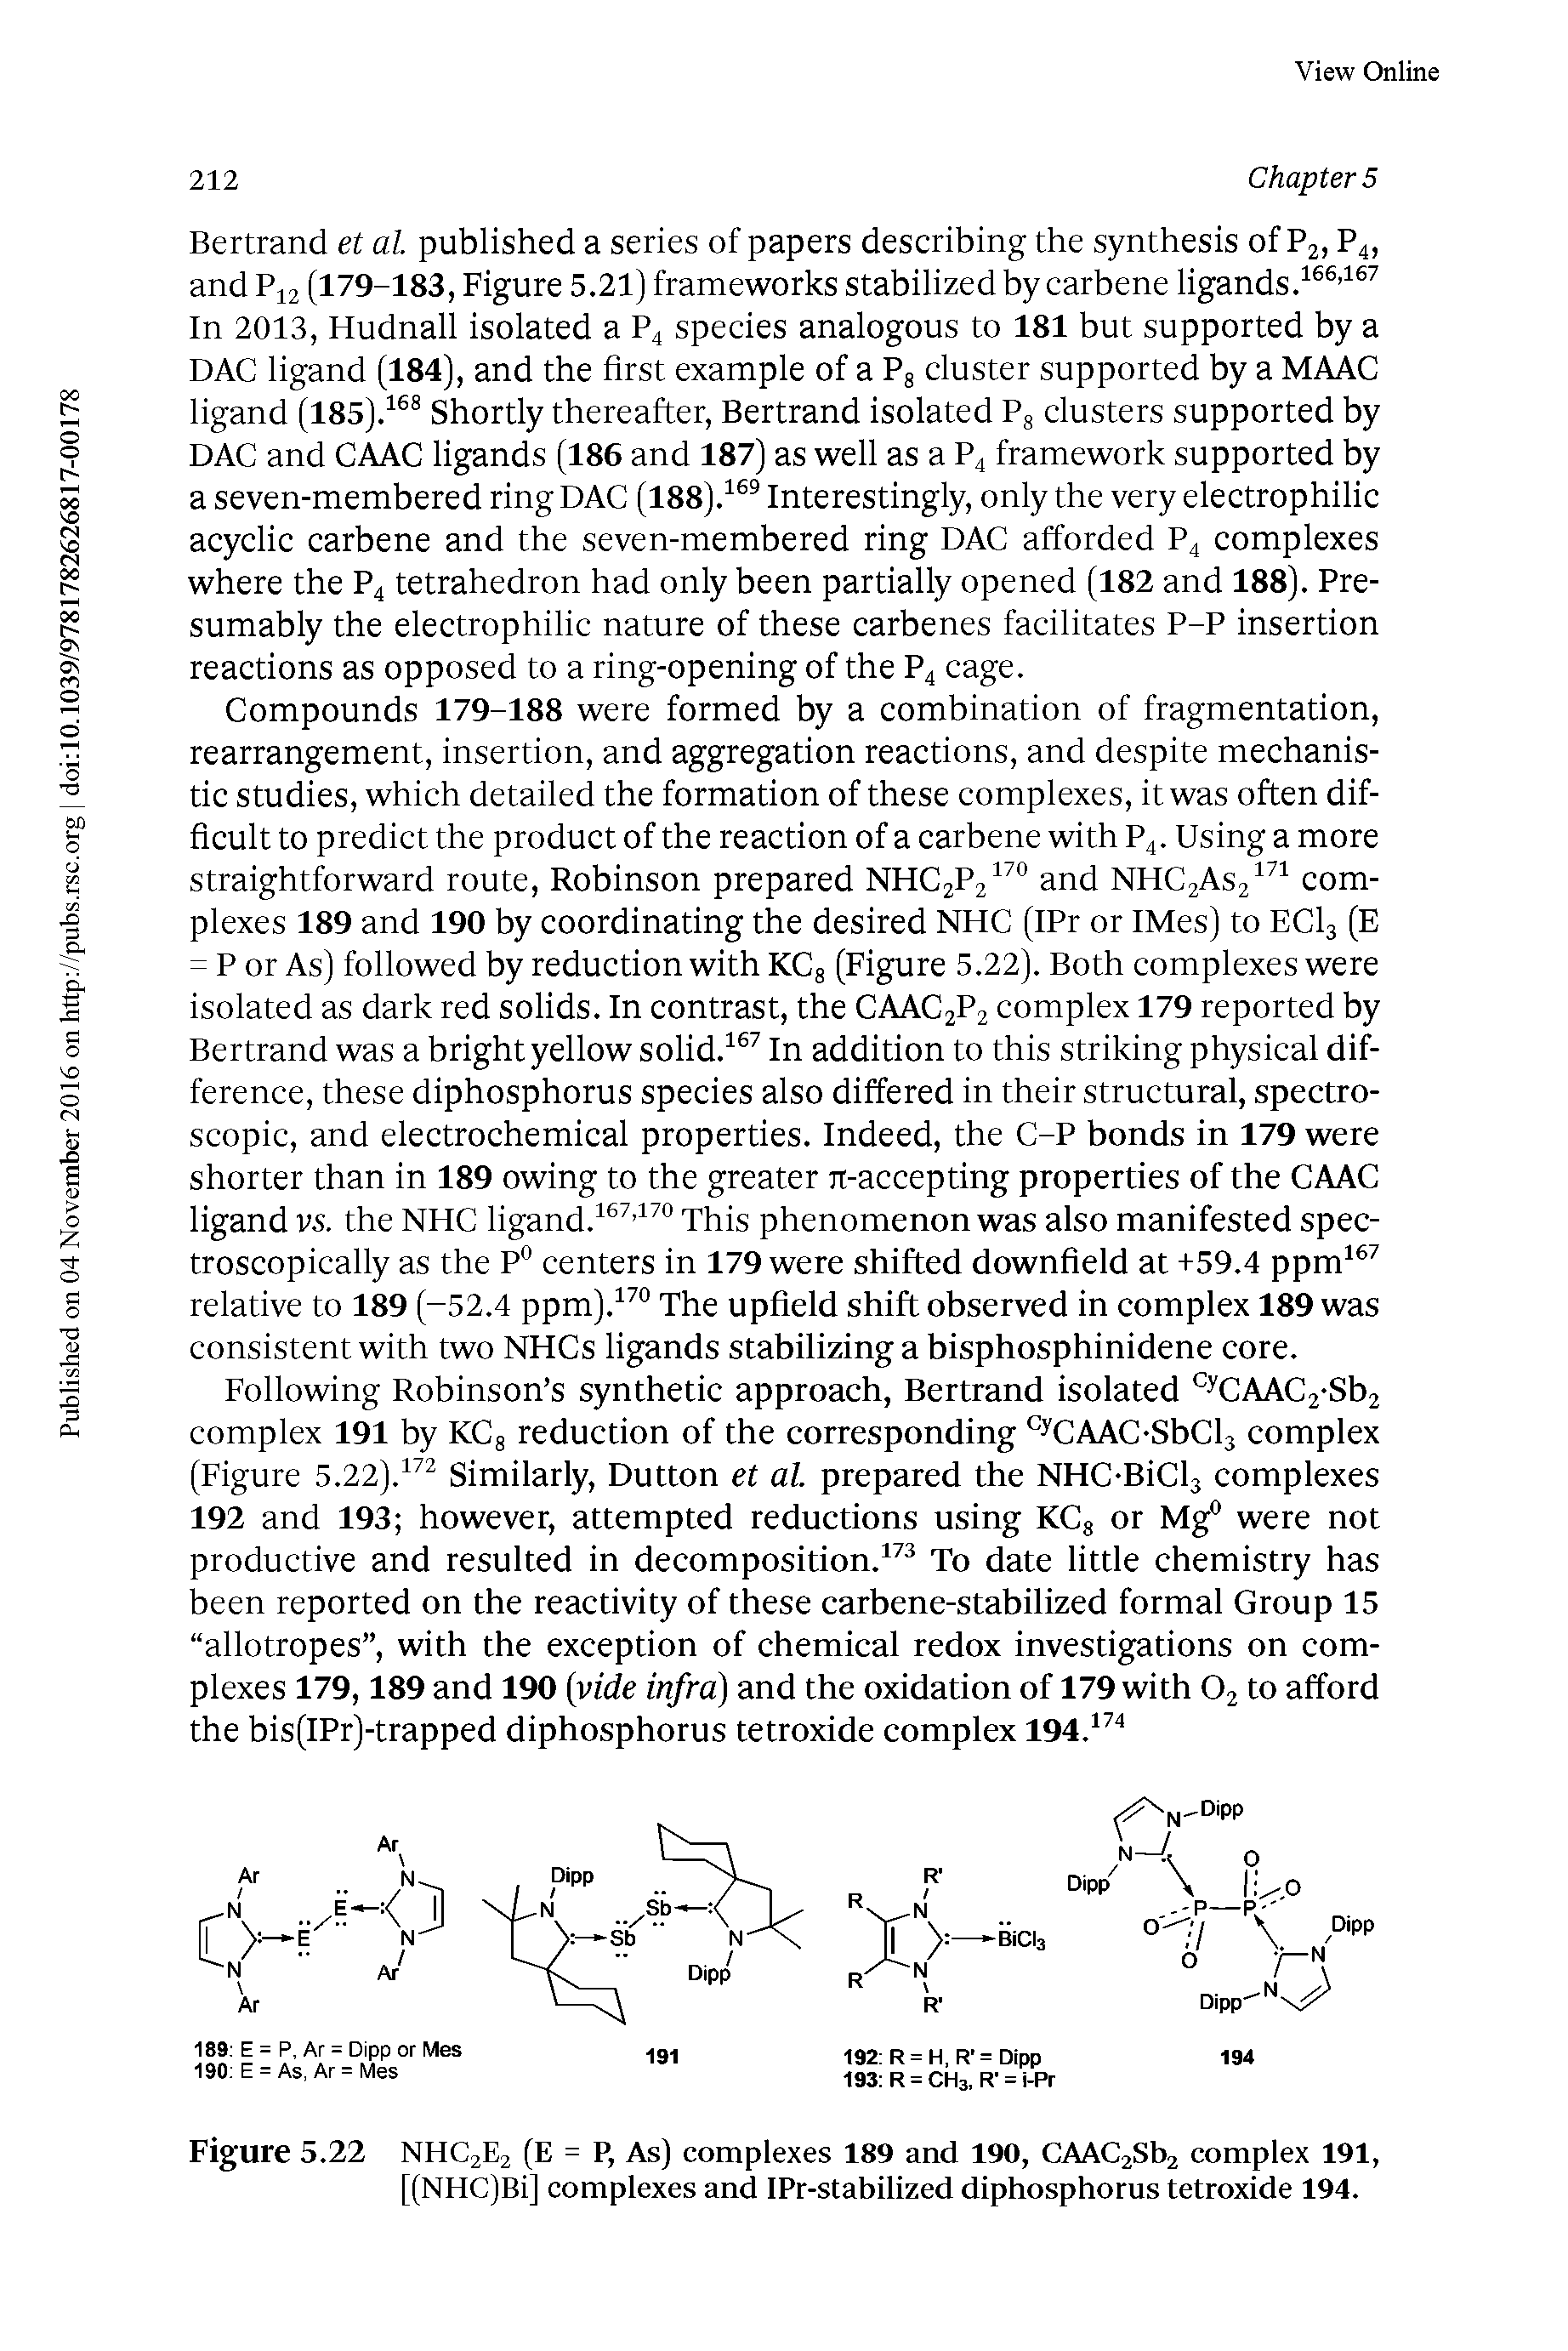 Figure 5.22 NHC2E2 (E = P, As) complexes 189 and 190, CAAC2Sb2 complex 191, [(NHC)Bi] complexes and IPr-stabilized diphosphorus tetroxide 194.